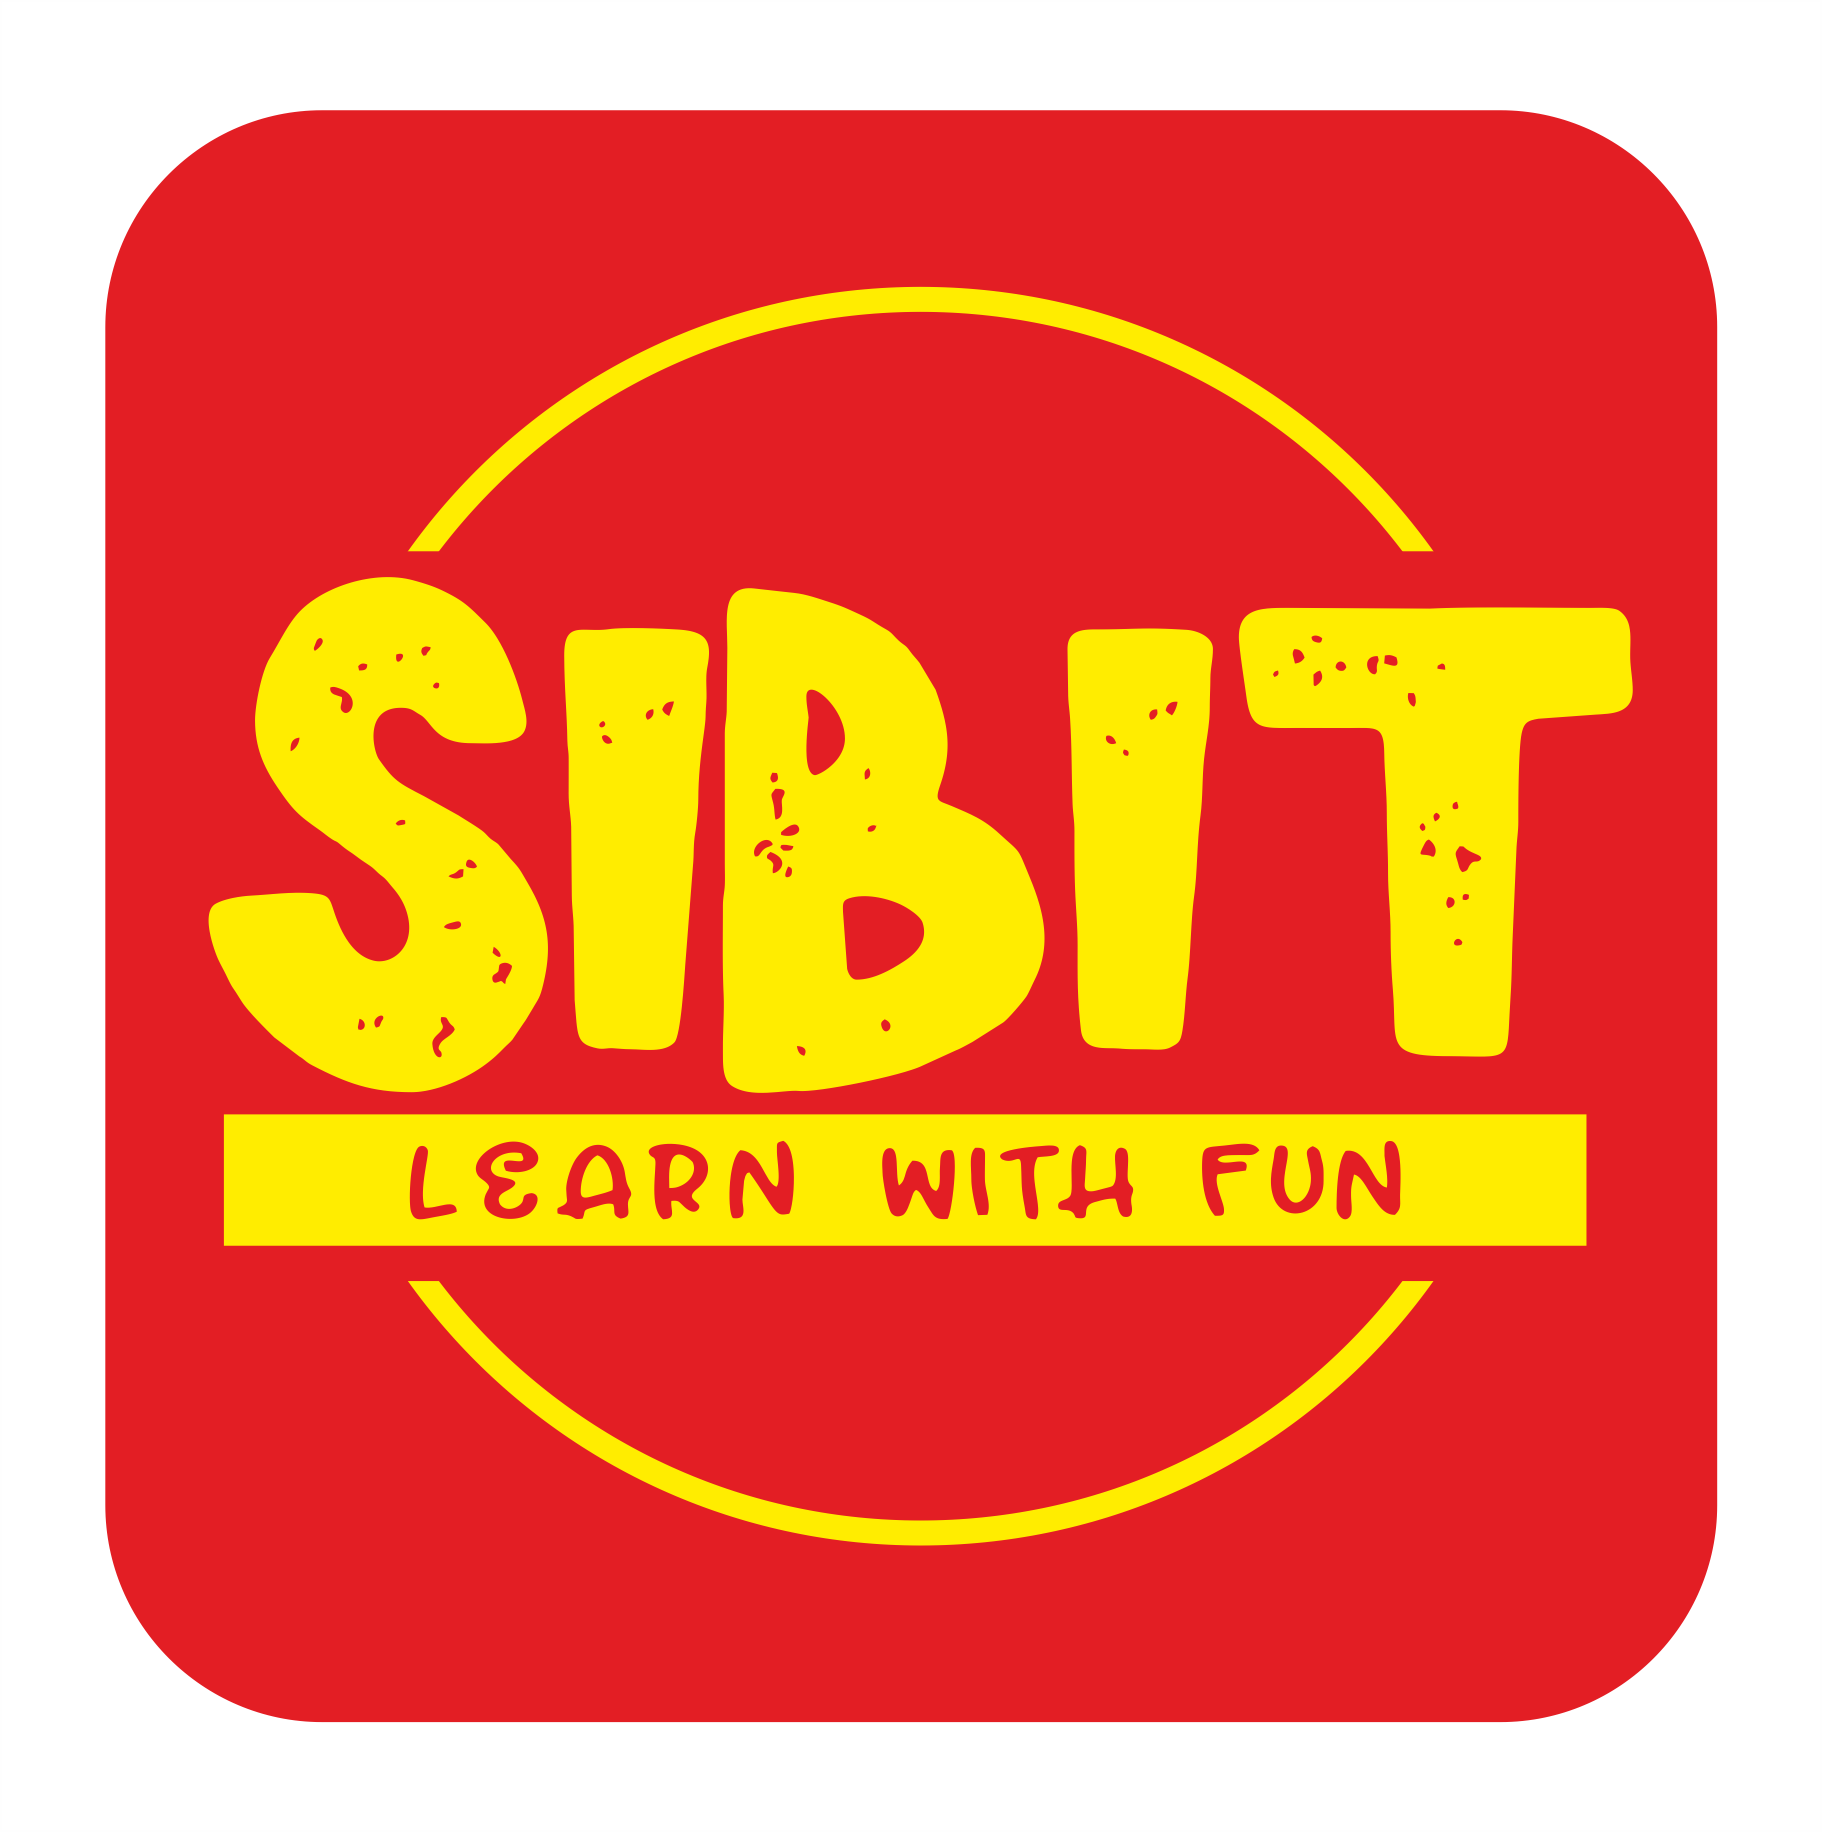 Sibit